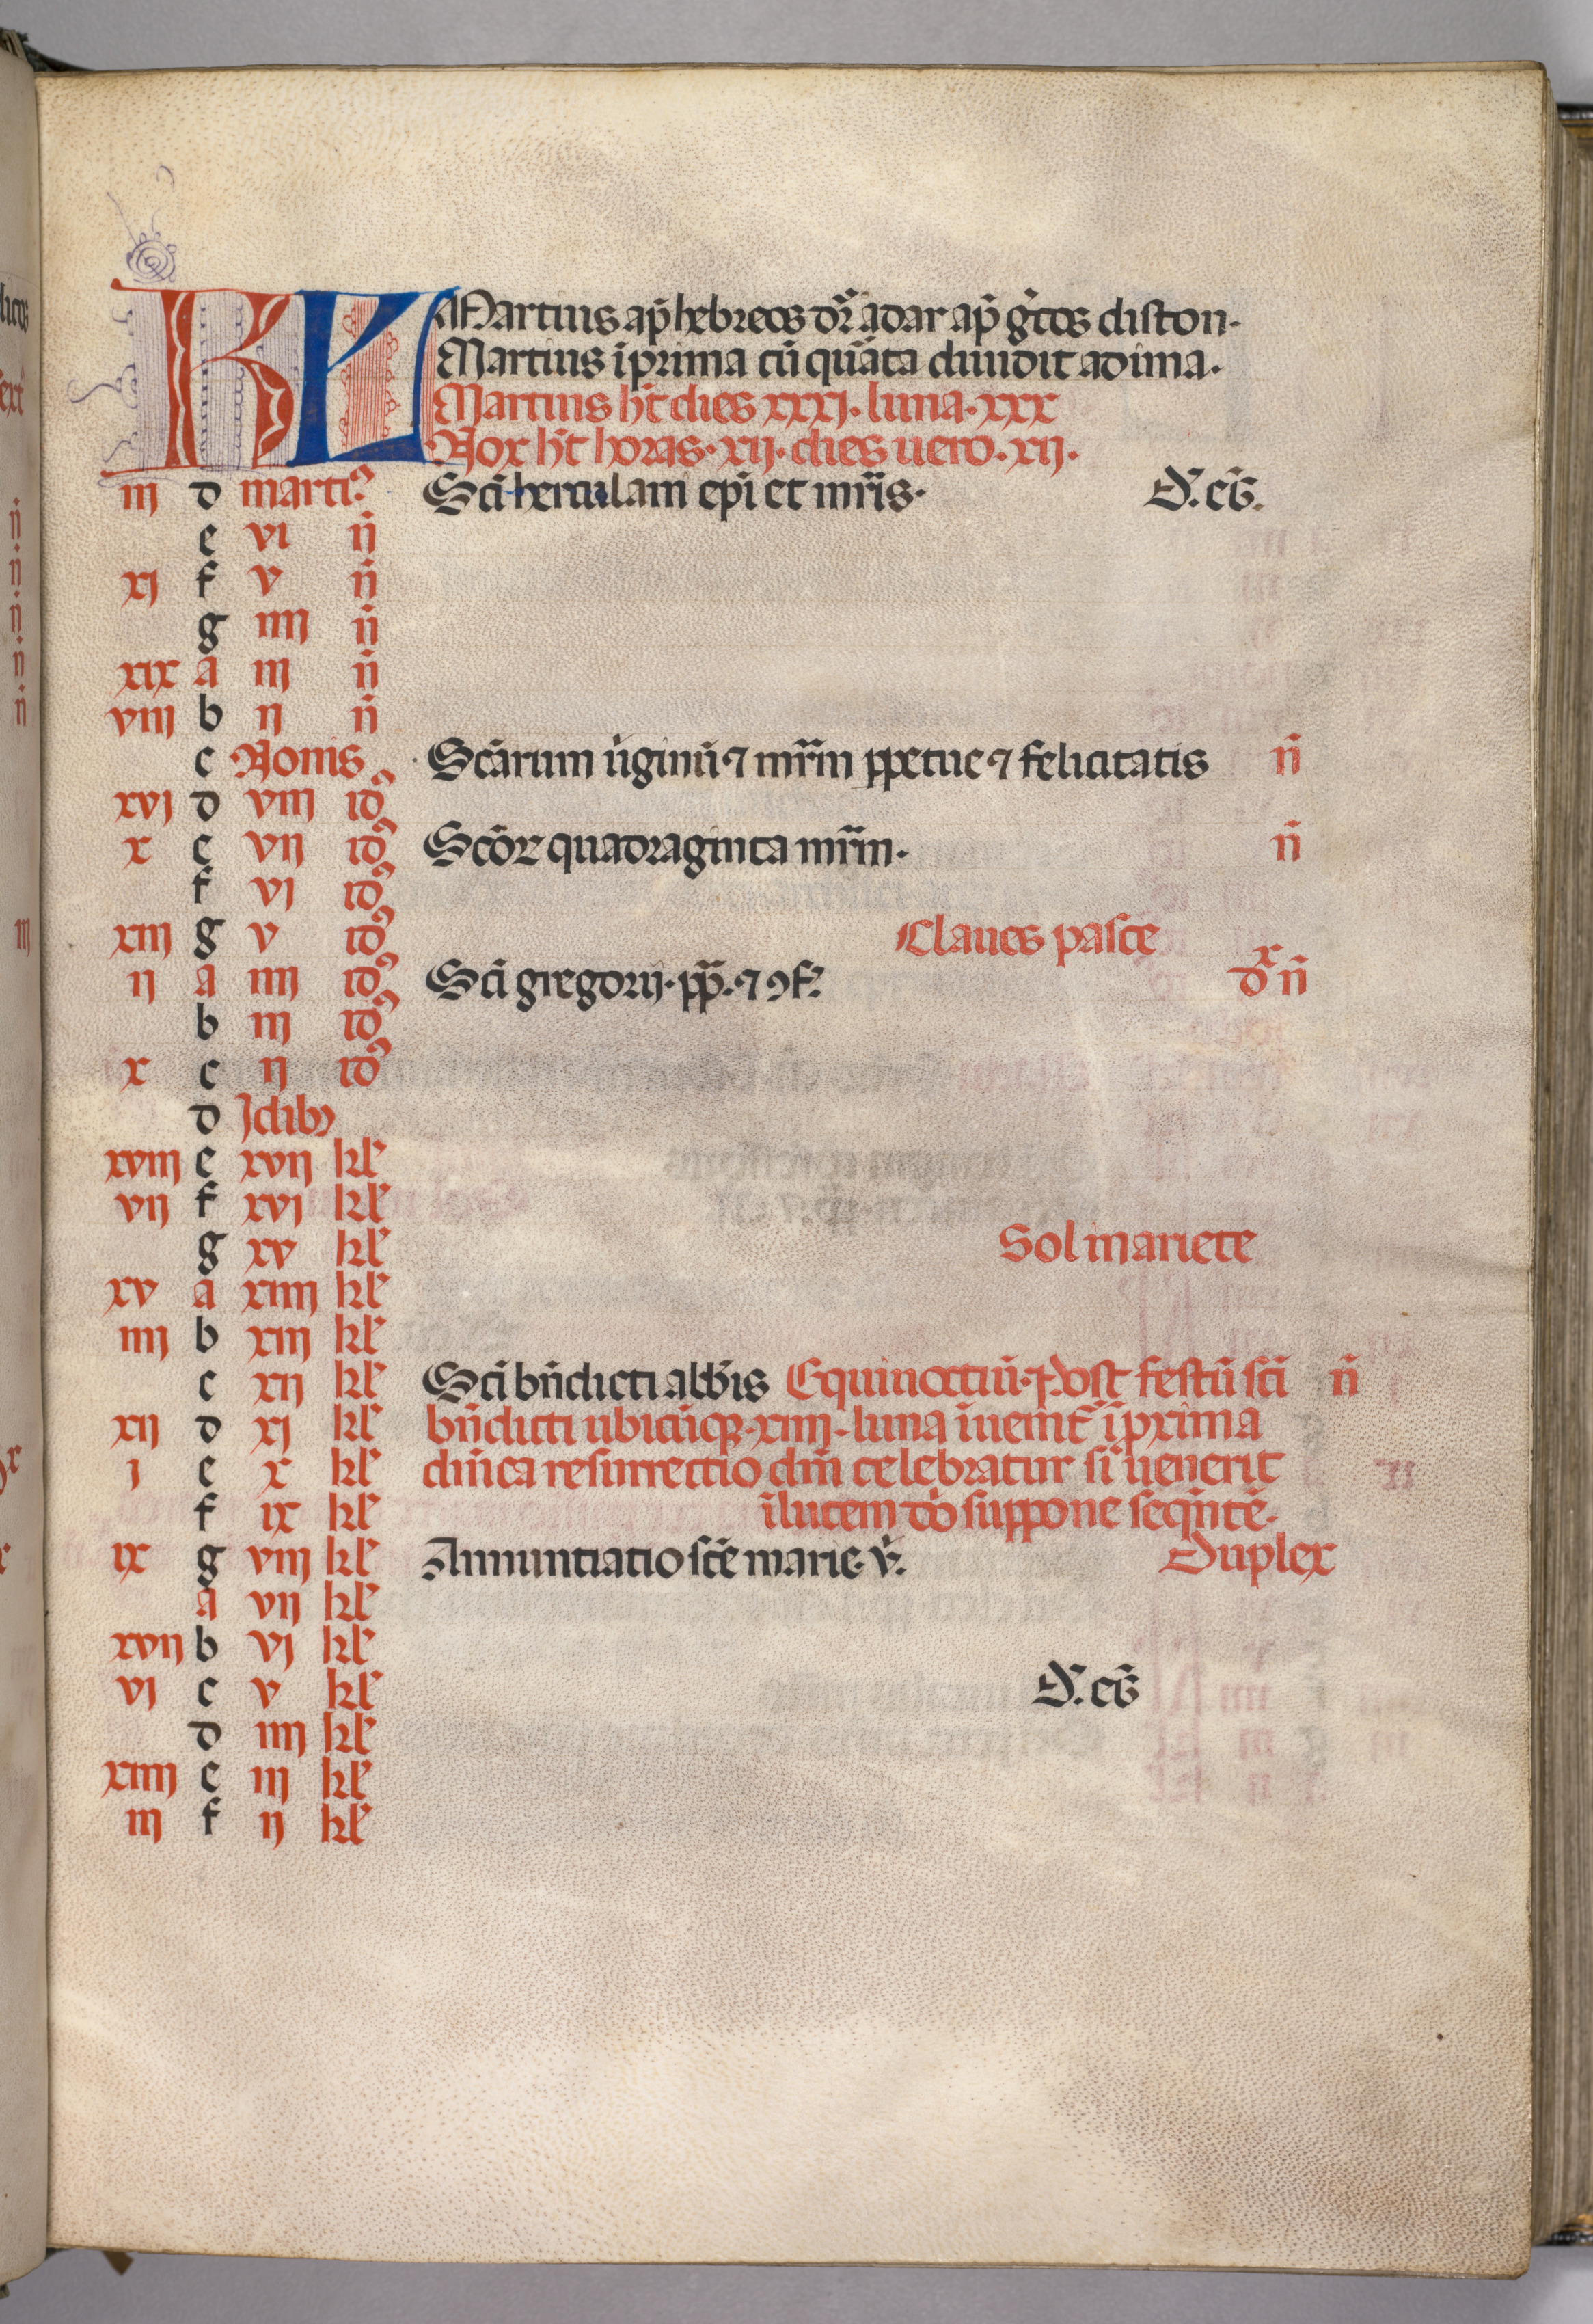 Missale: Fol. 4r: March Calendar Page